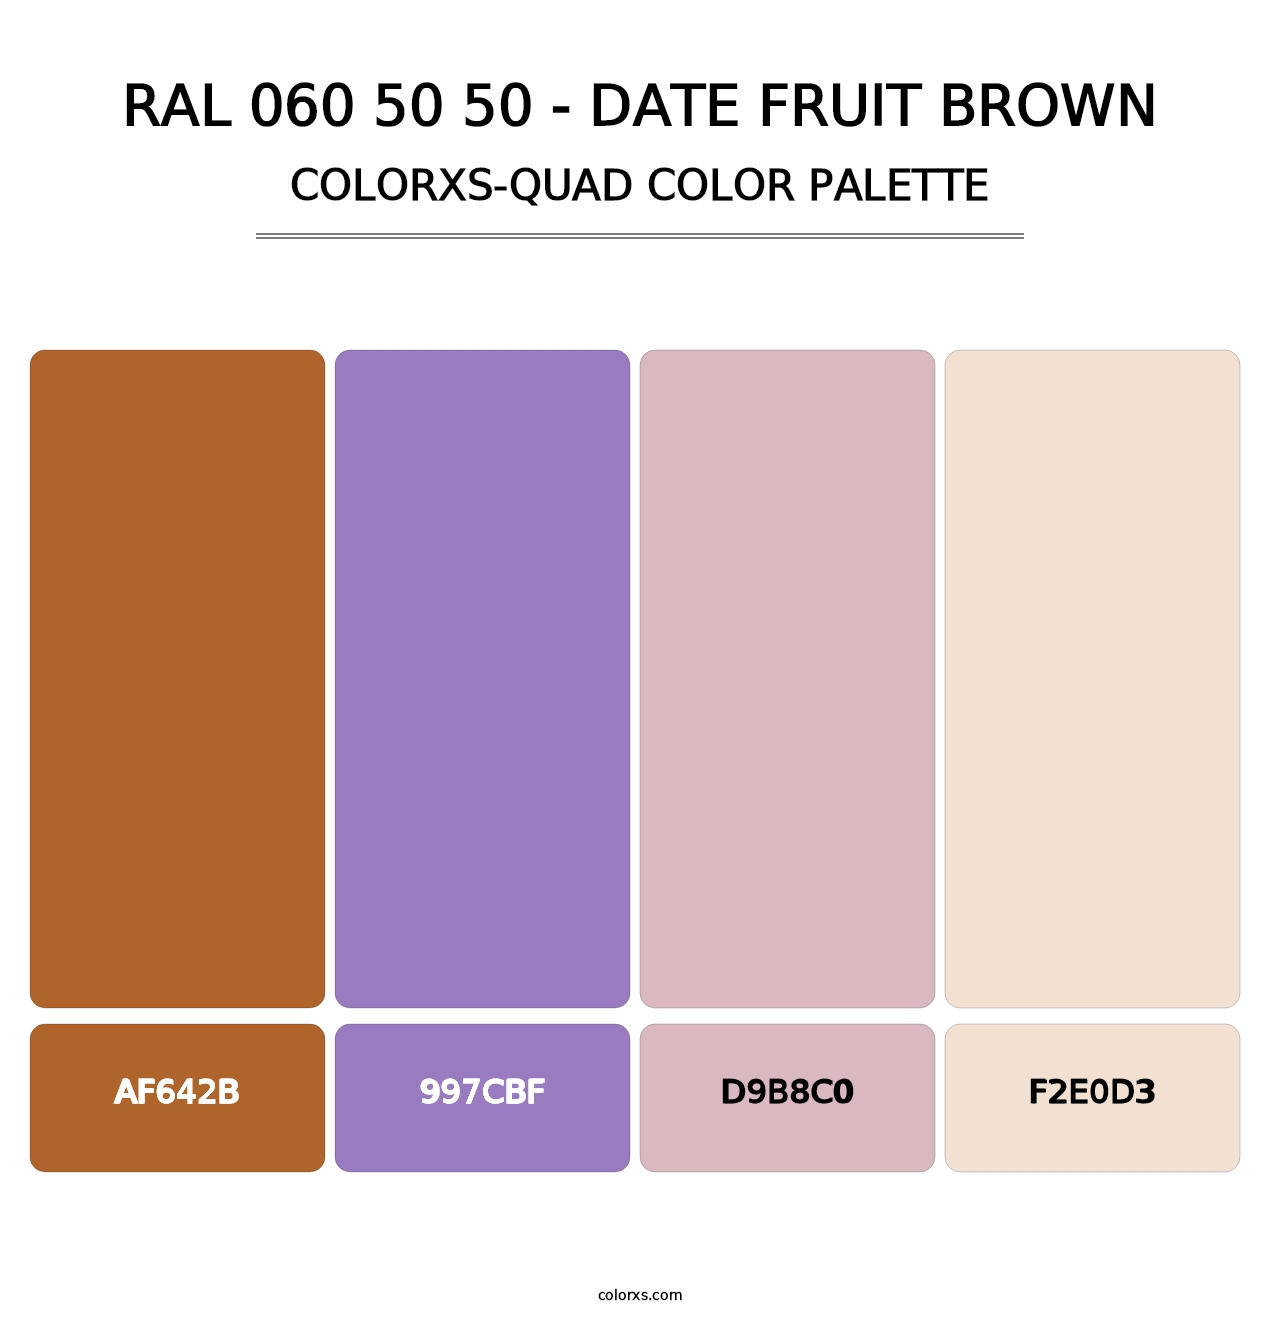 RAL 060 50 50 - Date Fruit Brown - Colorxs Quad Palette